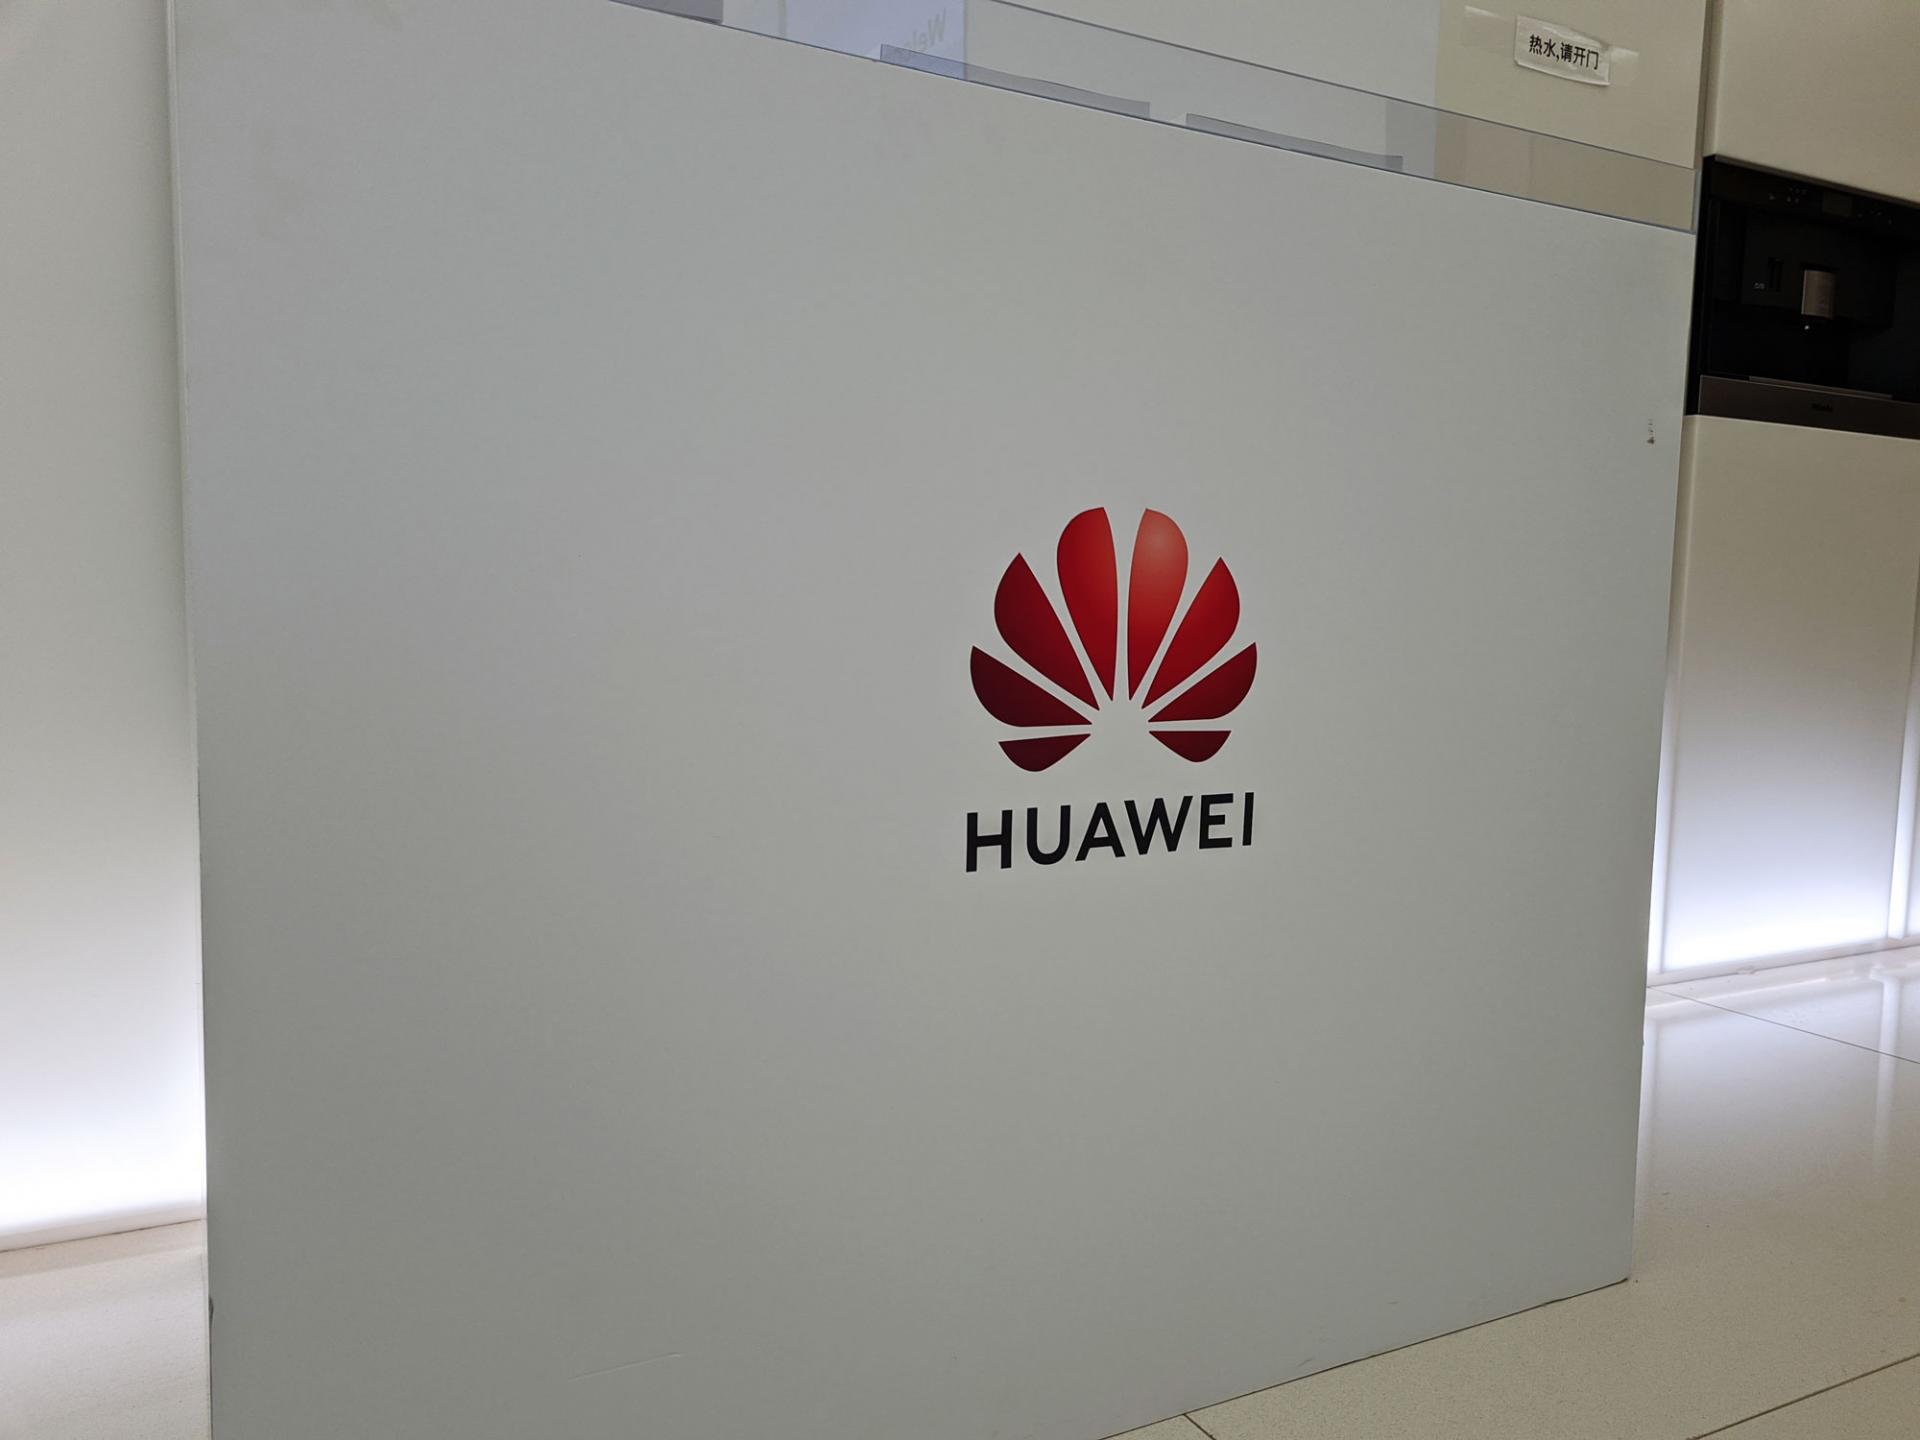 По словам гендиректора HUAWEI, китайские компании регулярно копируют бренд